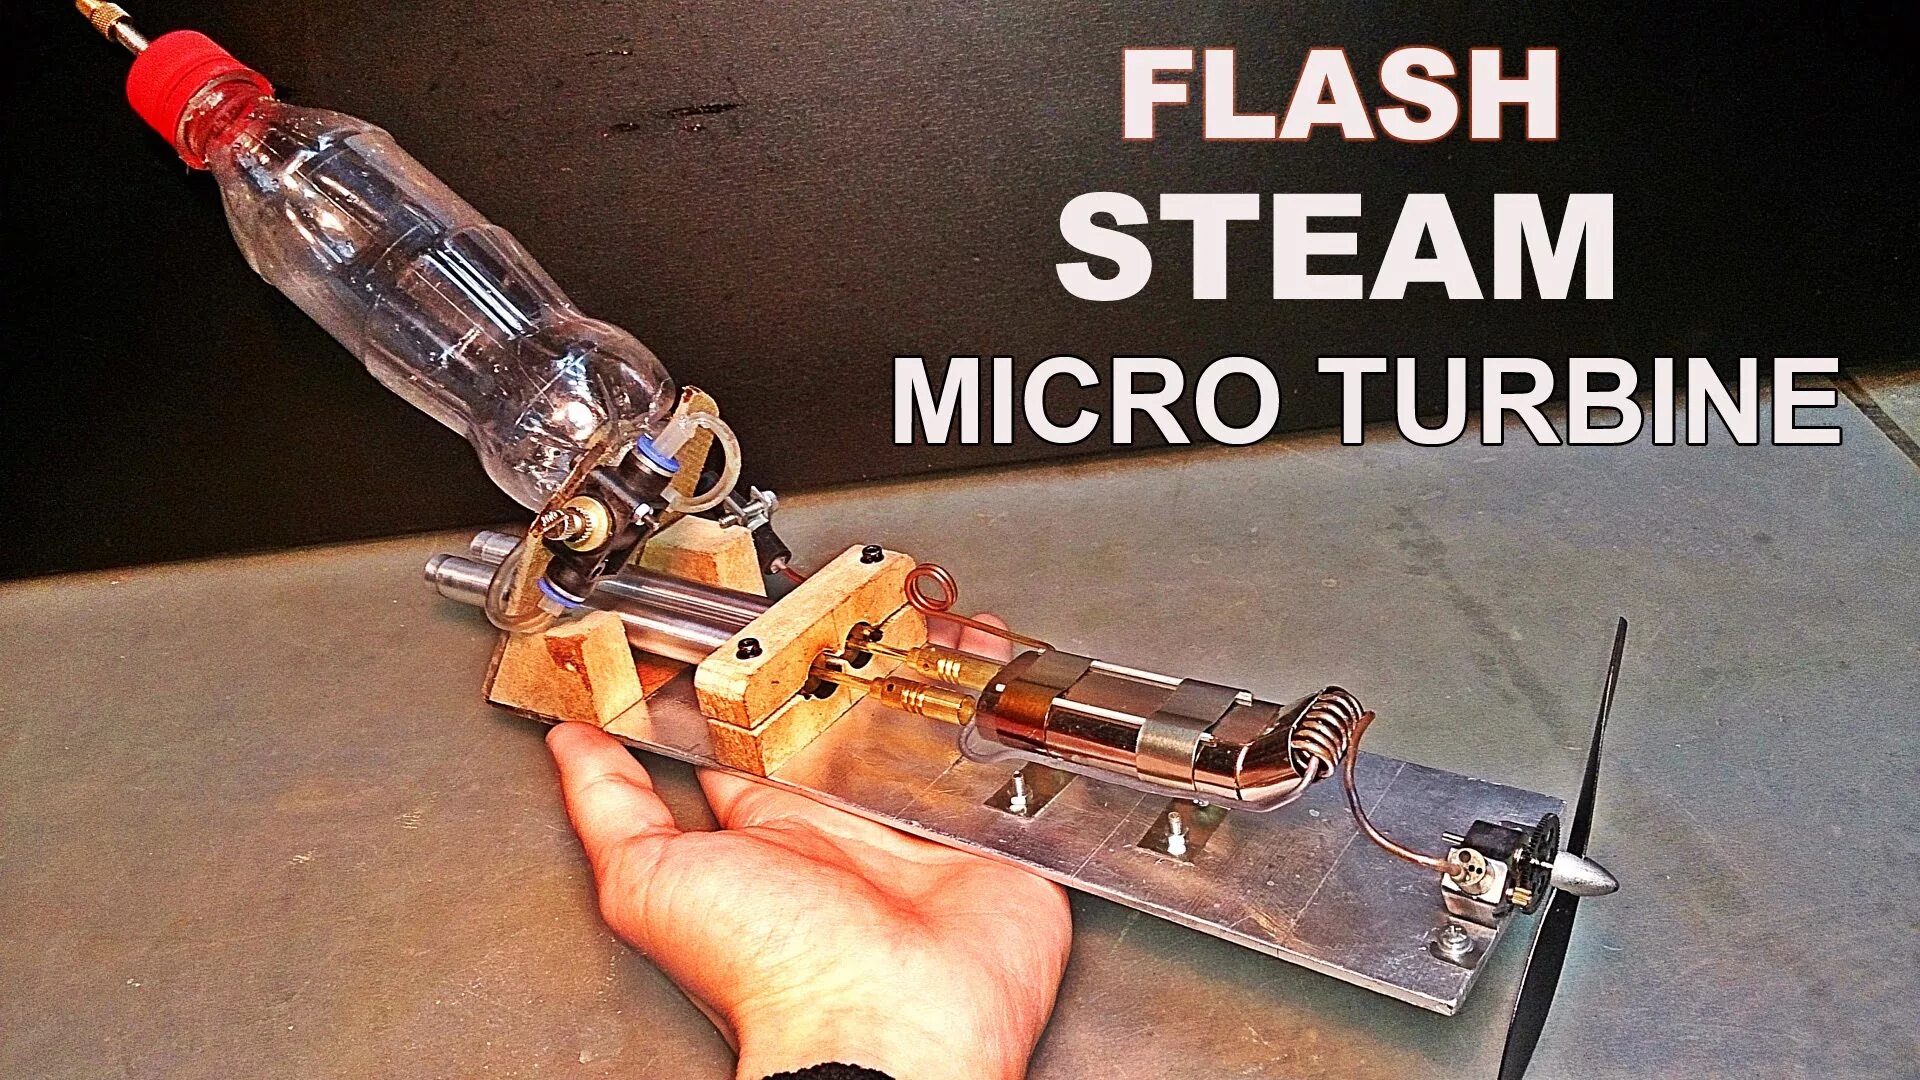 Micro Steam Turbine. Flash Steam Micro Turbine. Micro Steam Turbine e100. Mini Steam Turbine.